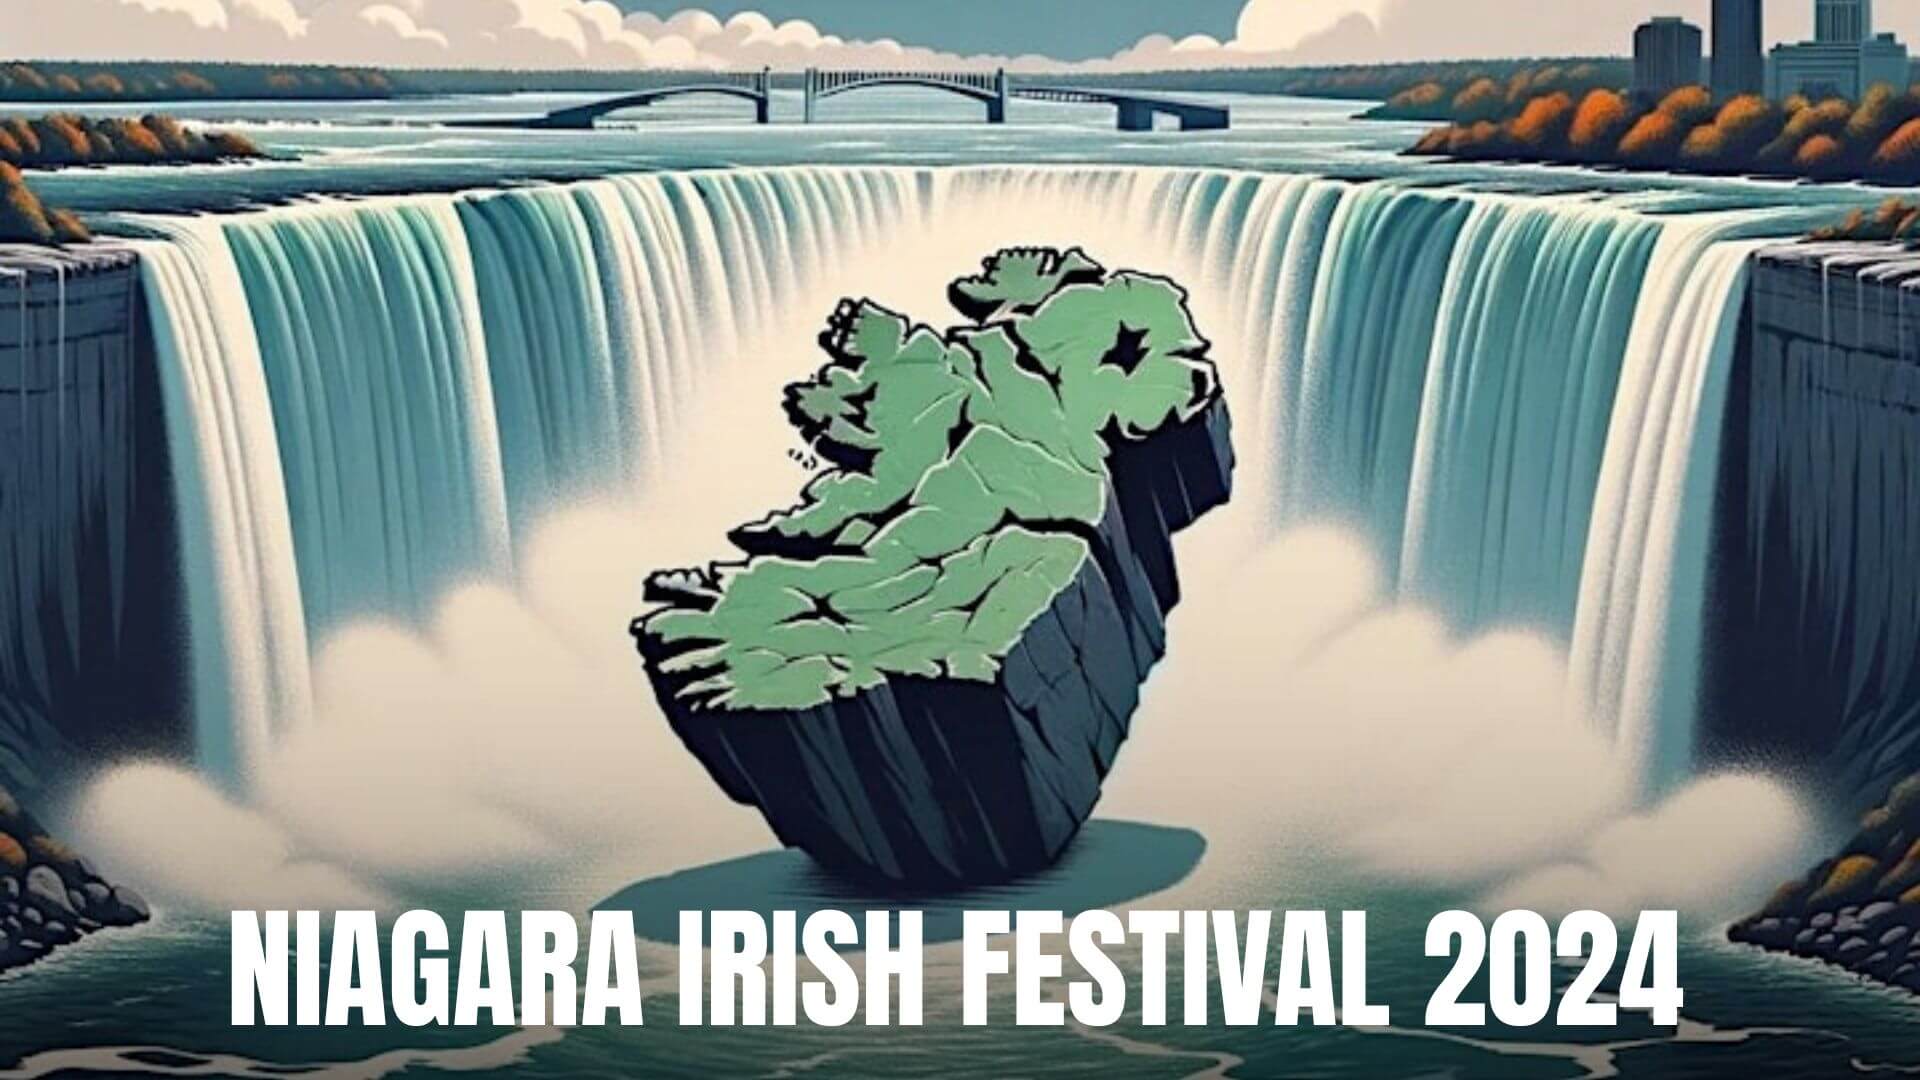 Irish Music Festival cover image of ireland over the falls graphic